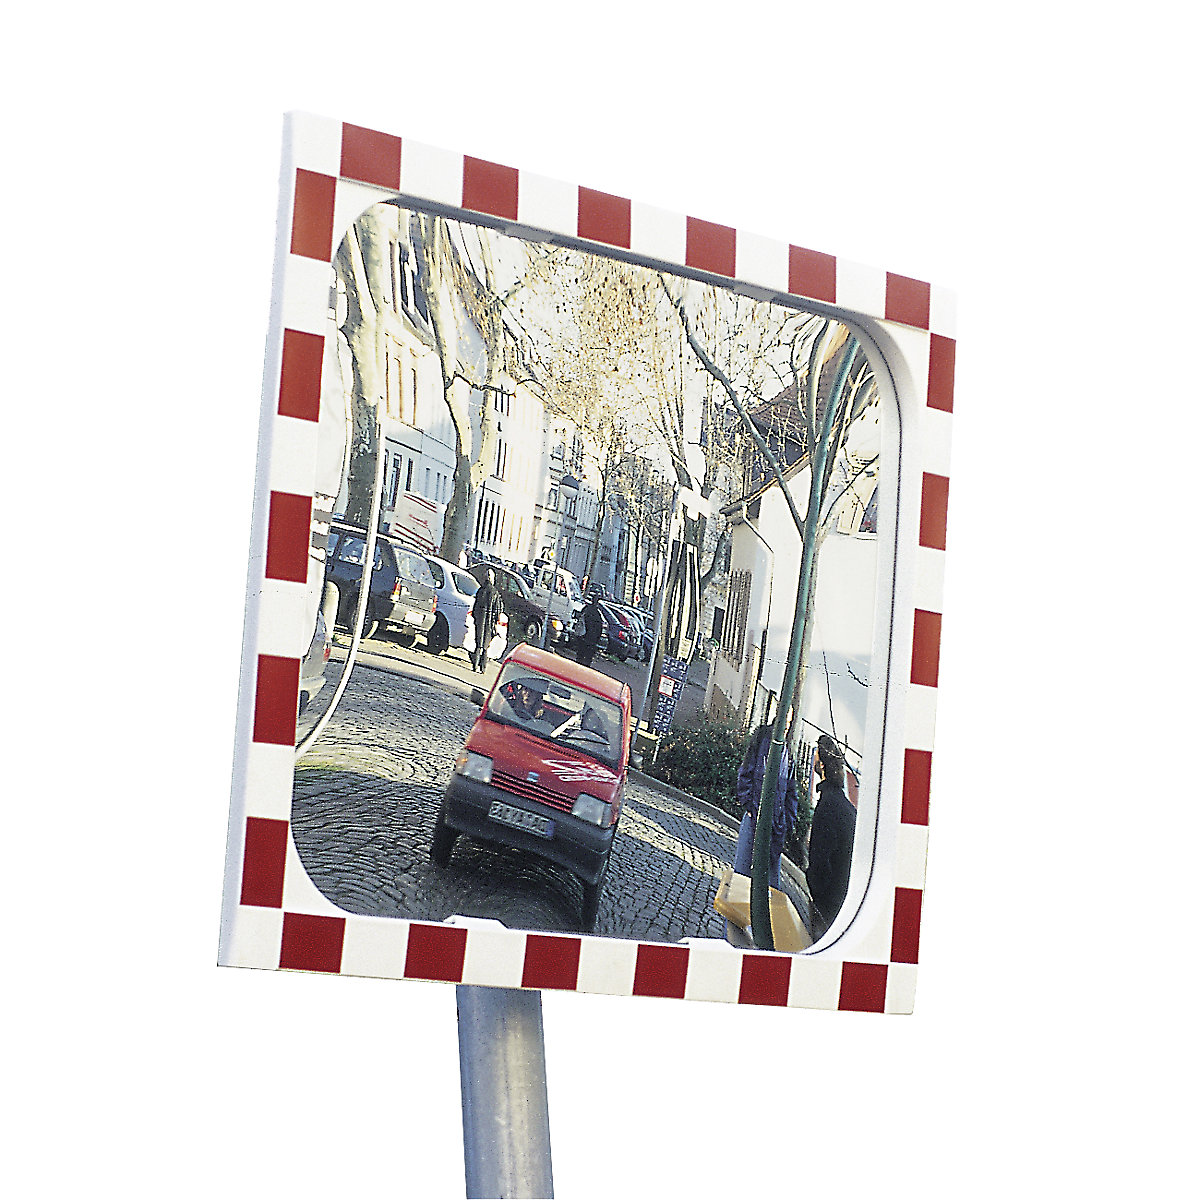 Verkehrsspiegel: Spiegel aus Sekurit, Rahmen aus Kunststoff, rot